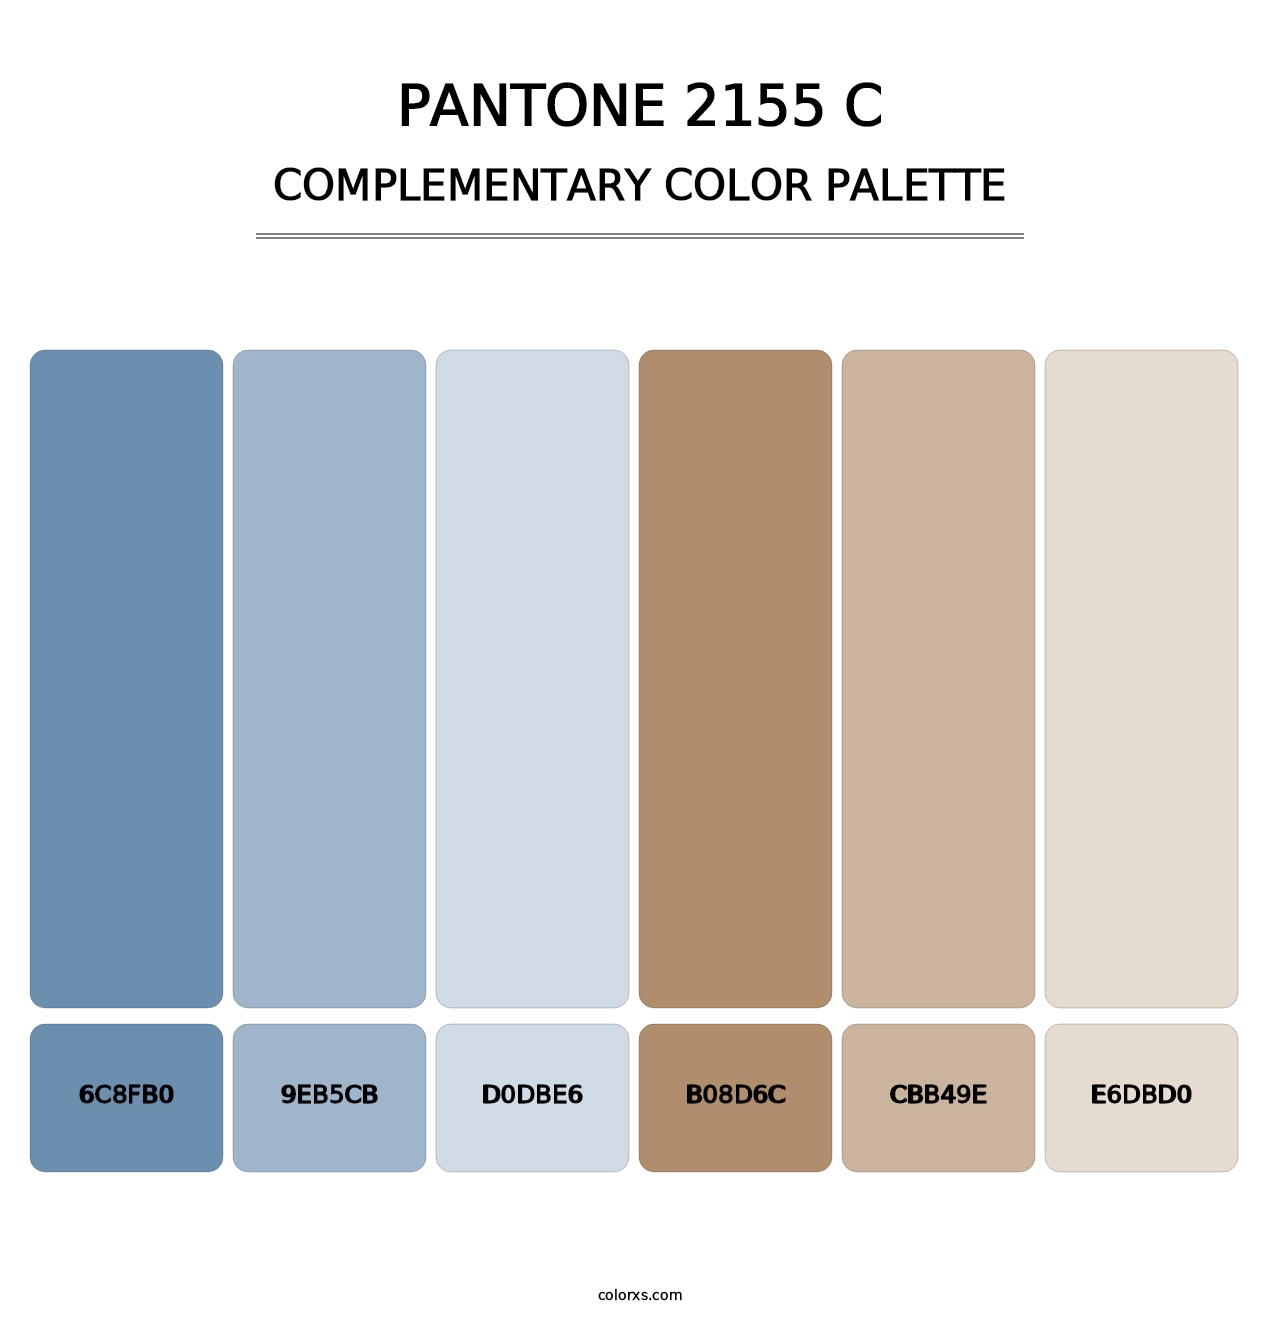 PANTONE 2155 C - Complementary Color Palette